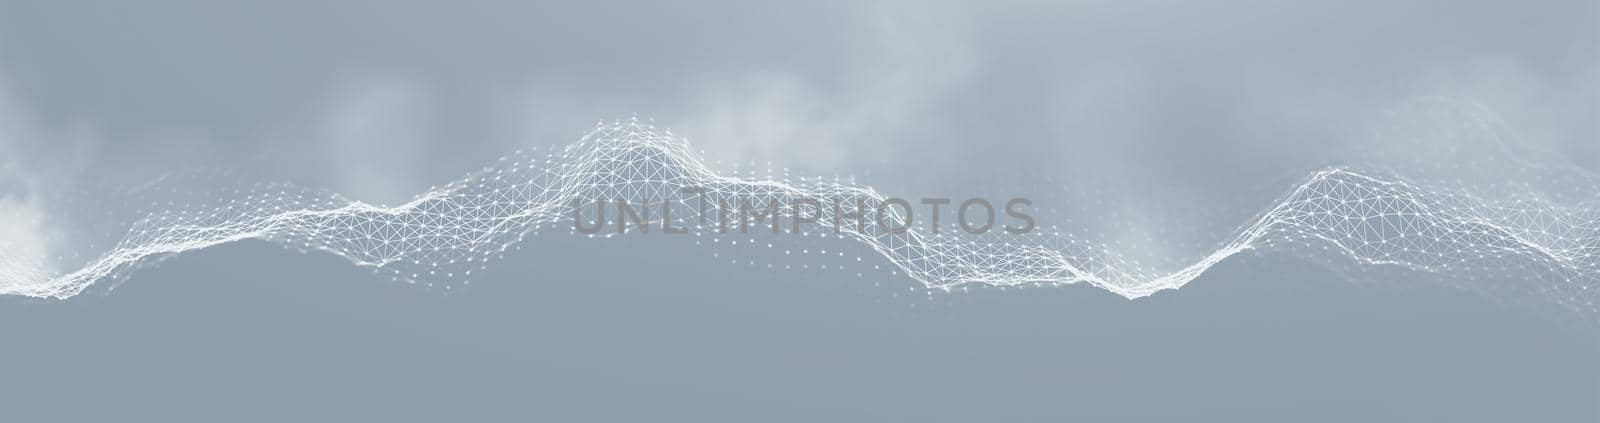 Light abstract technology background. Technology network digital pattern by DmytroRazinkov